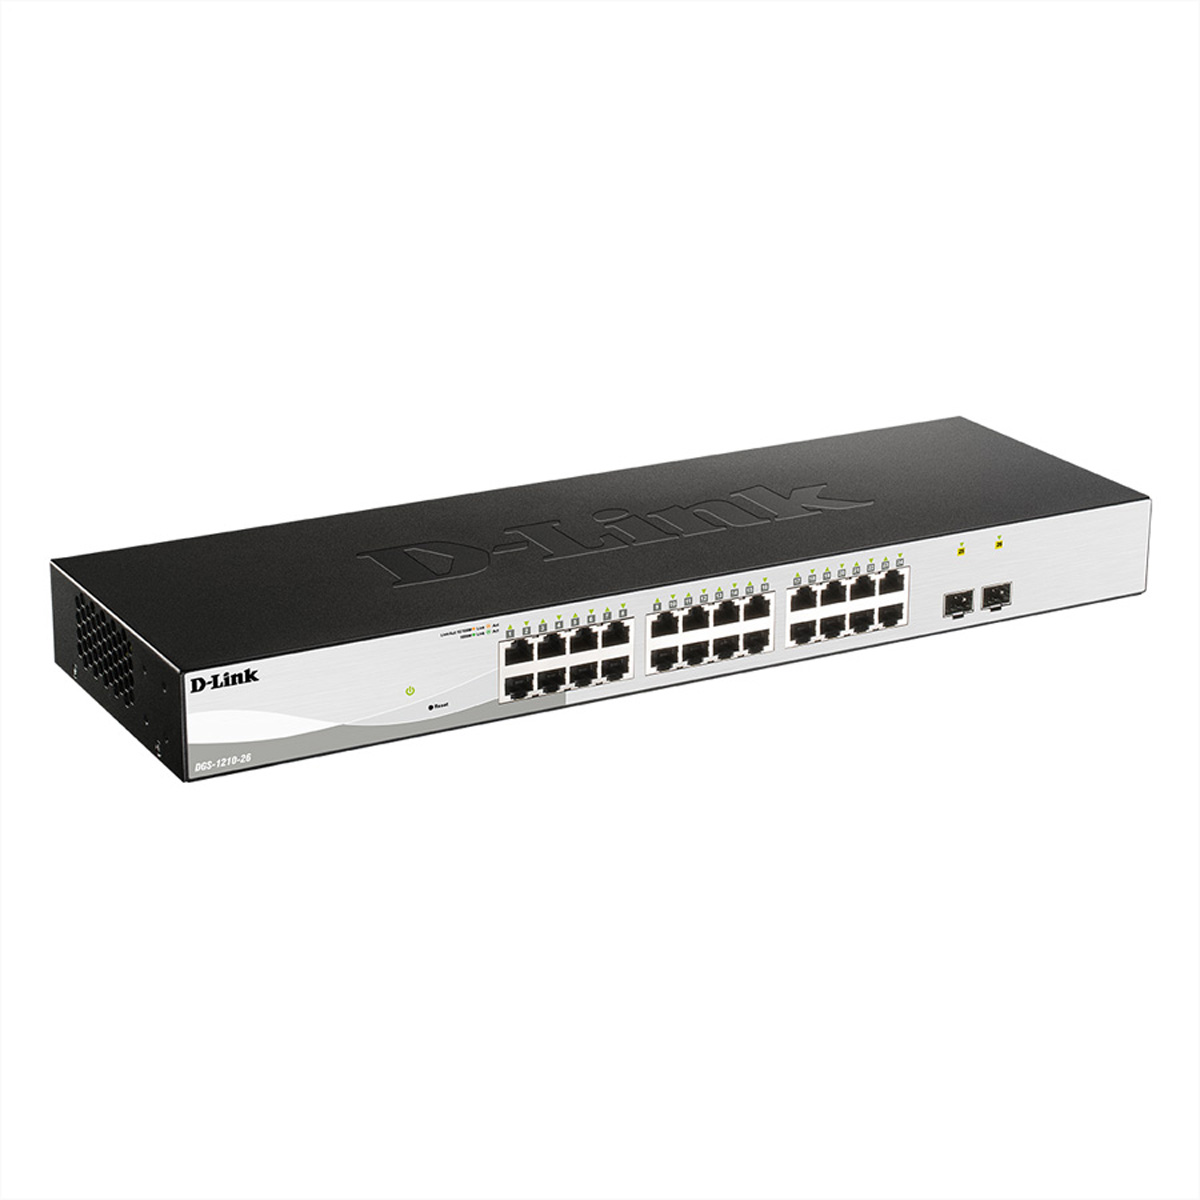 DGS-1210-26 Switch Gigabit Switch Ethernet Managed Gigabit D-LINK 26-Port Smart Layer2